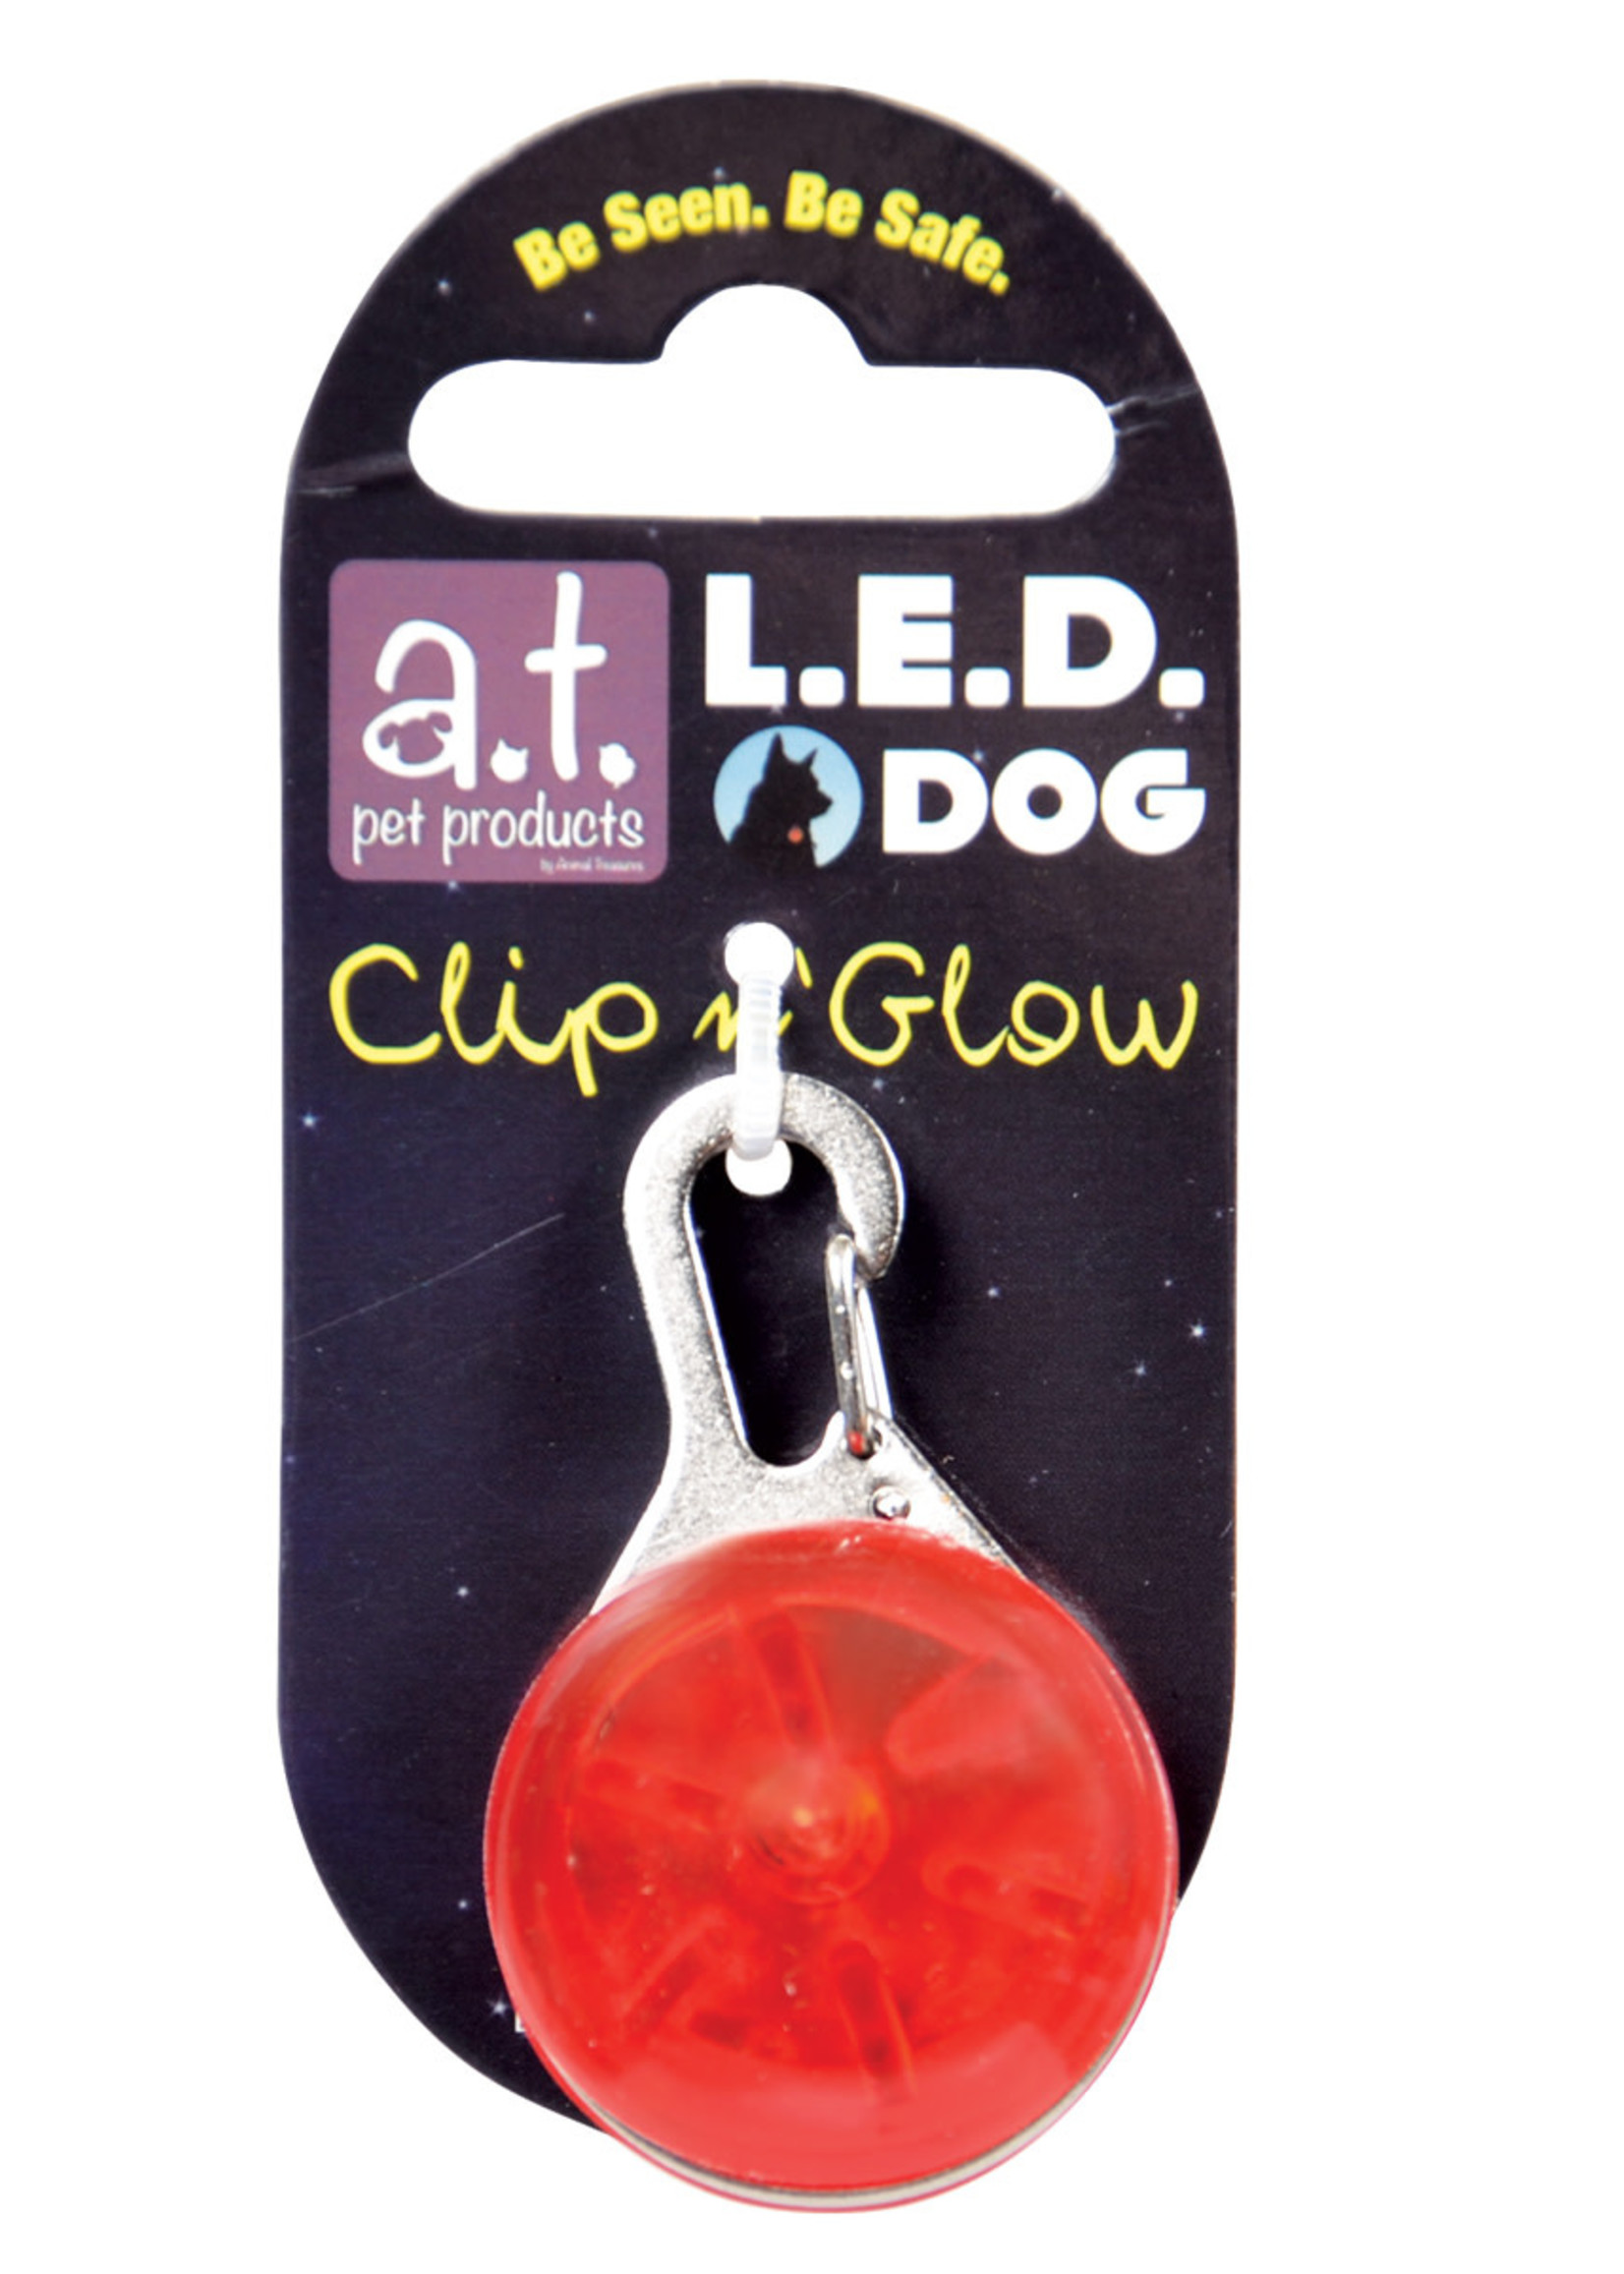 Animal Treasures Animal Treasures LED Clip n' Glow Tag